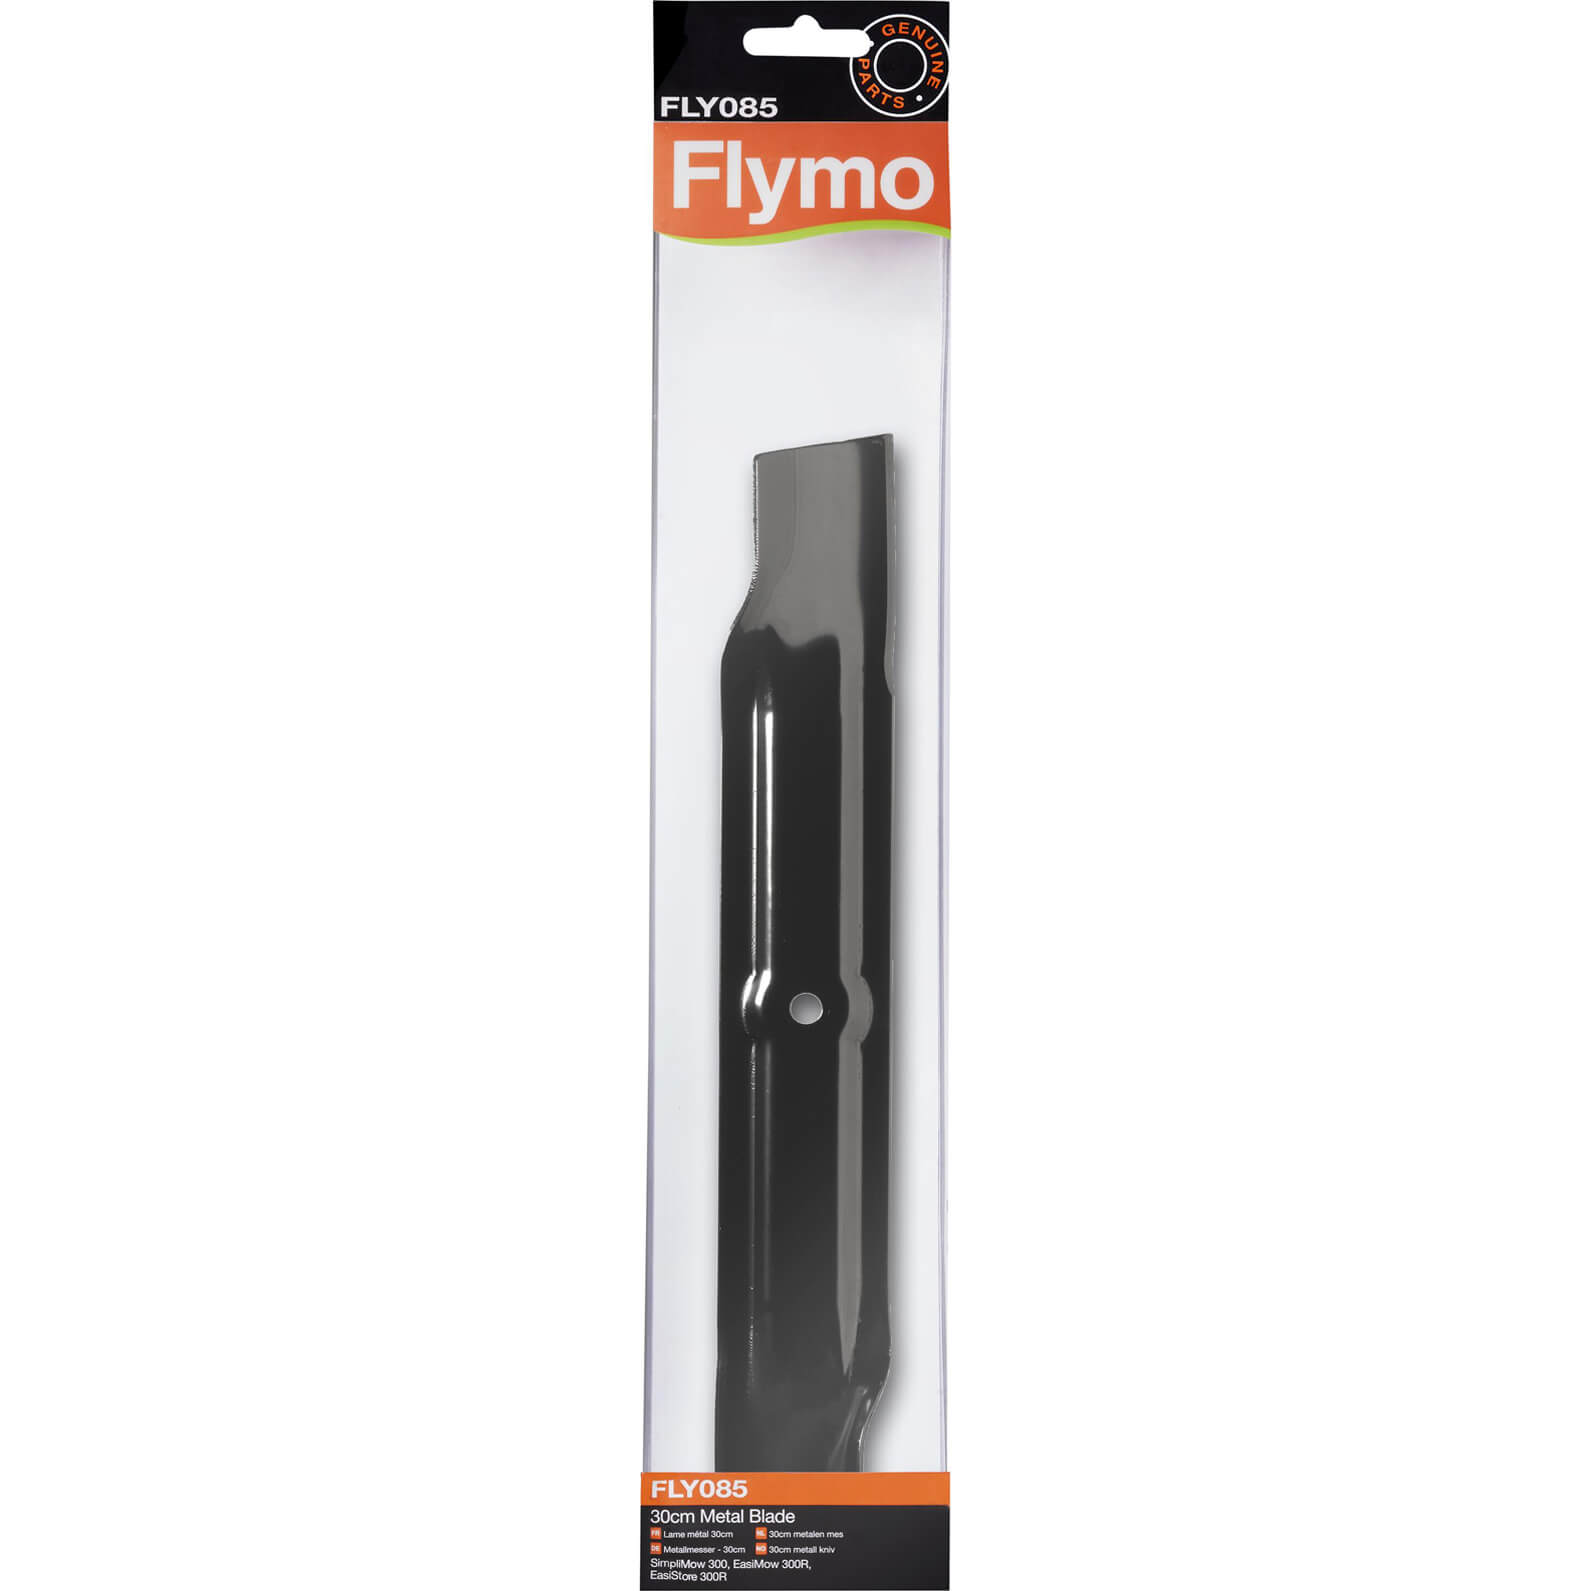 Flymo FLY085 Genuine Blade for EasiMow, EasiStore 300R SimpliMow 300 Lawnmowers 300mm Pack of 1